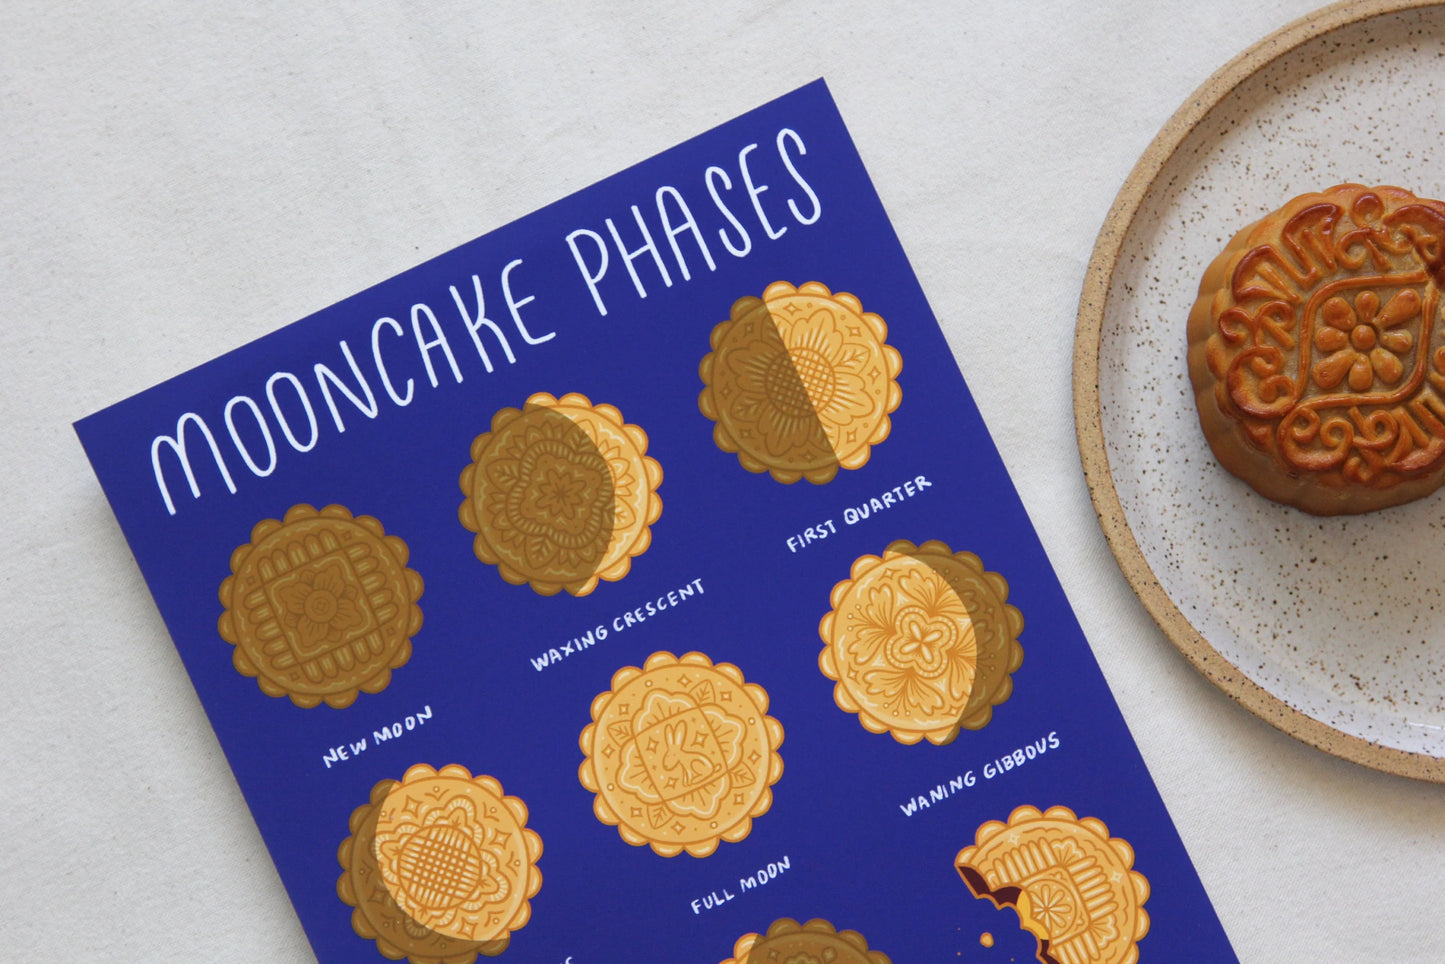 Mooncake Phases - 8x10 Print - Jane Li Co